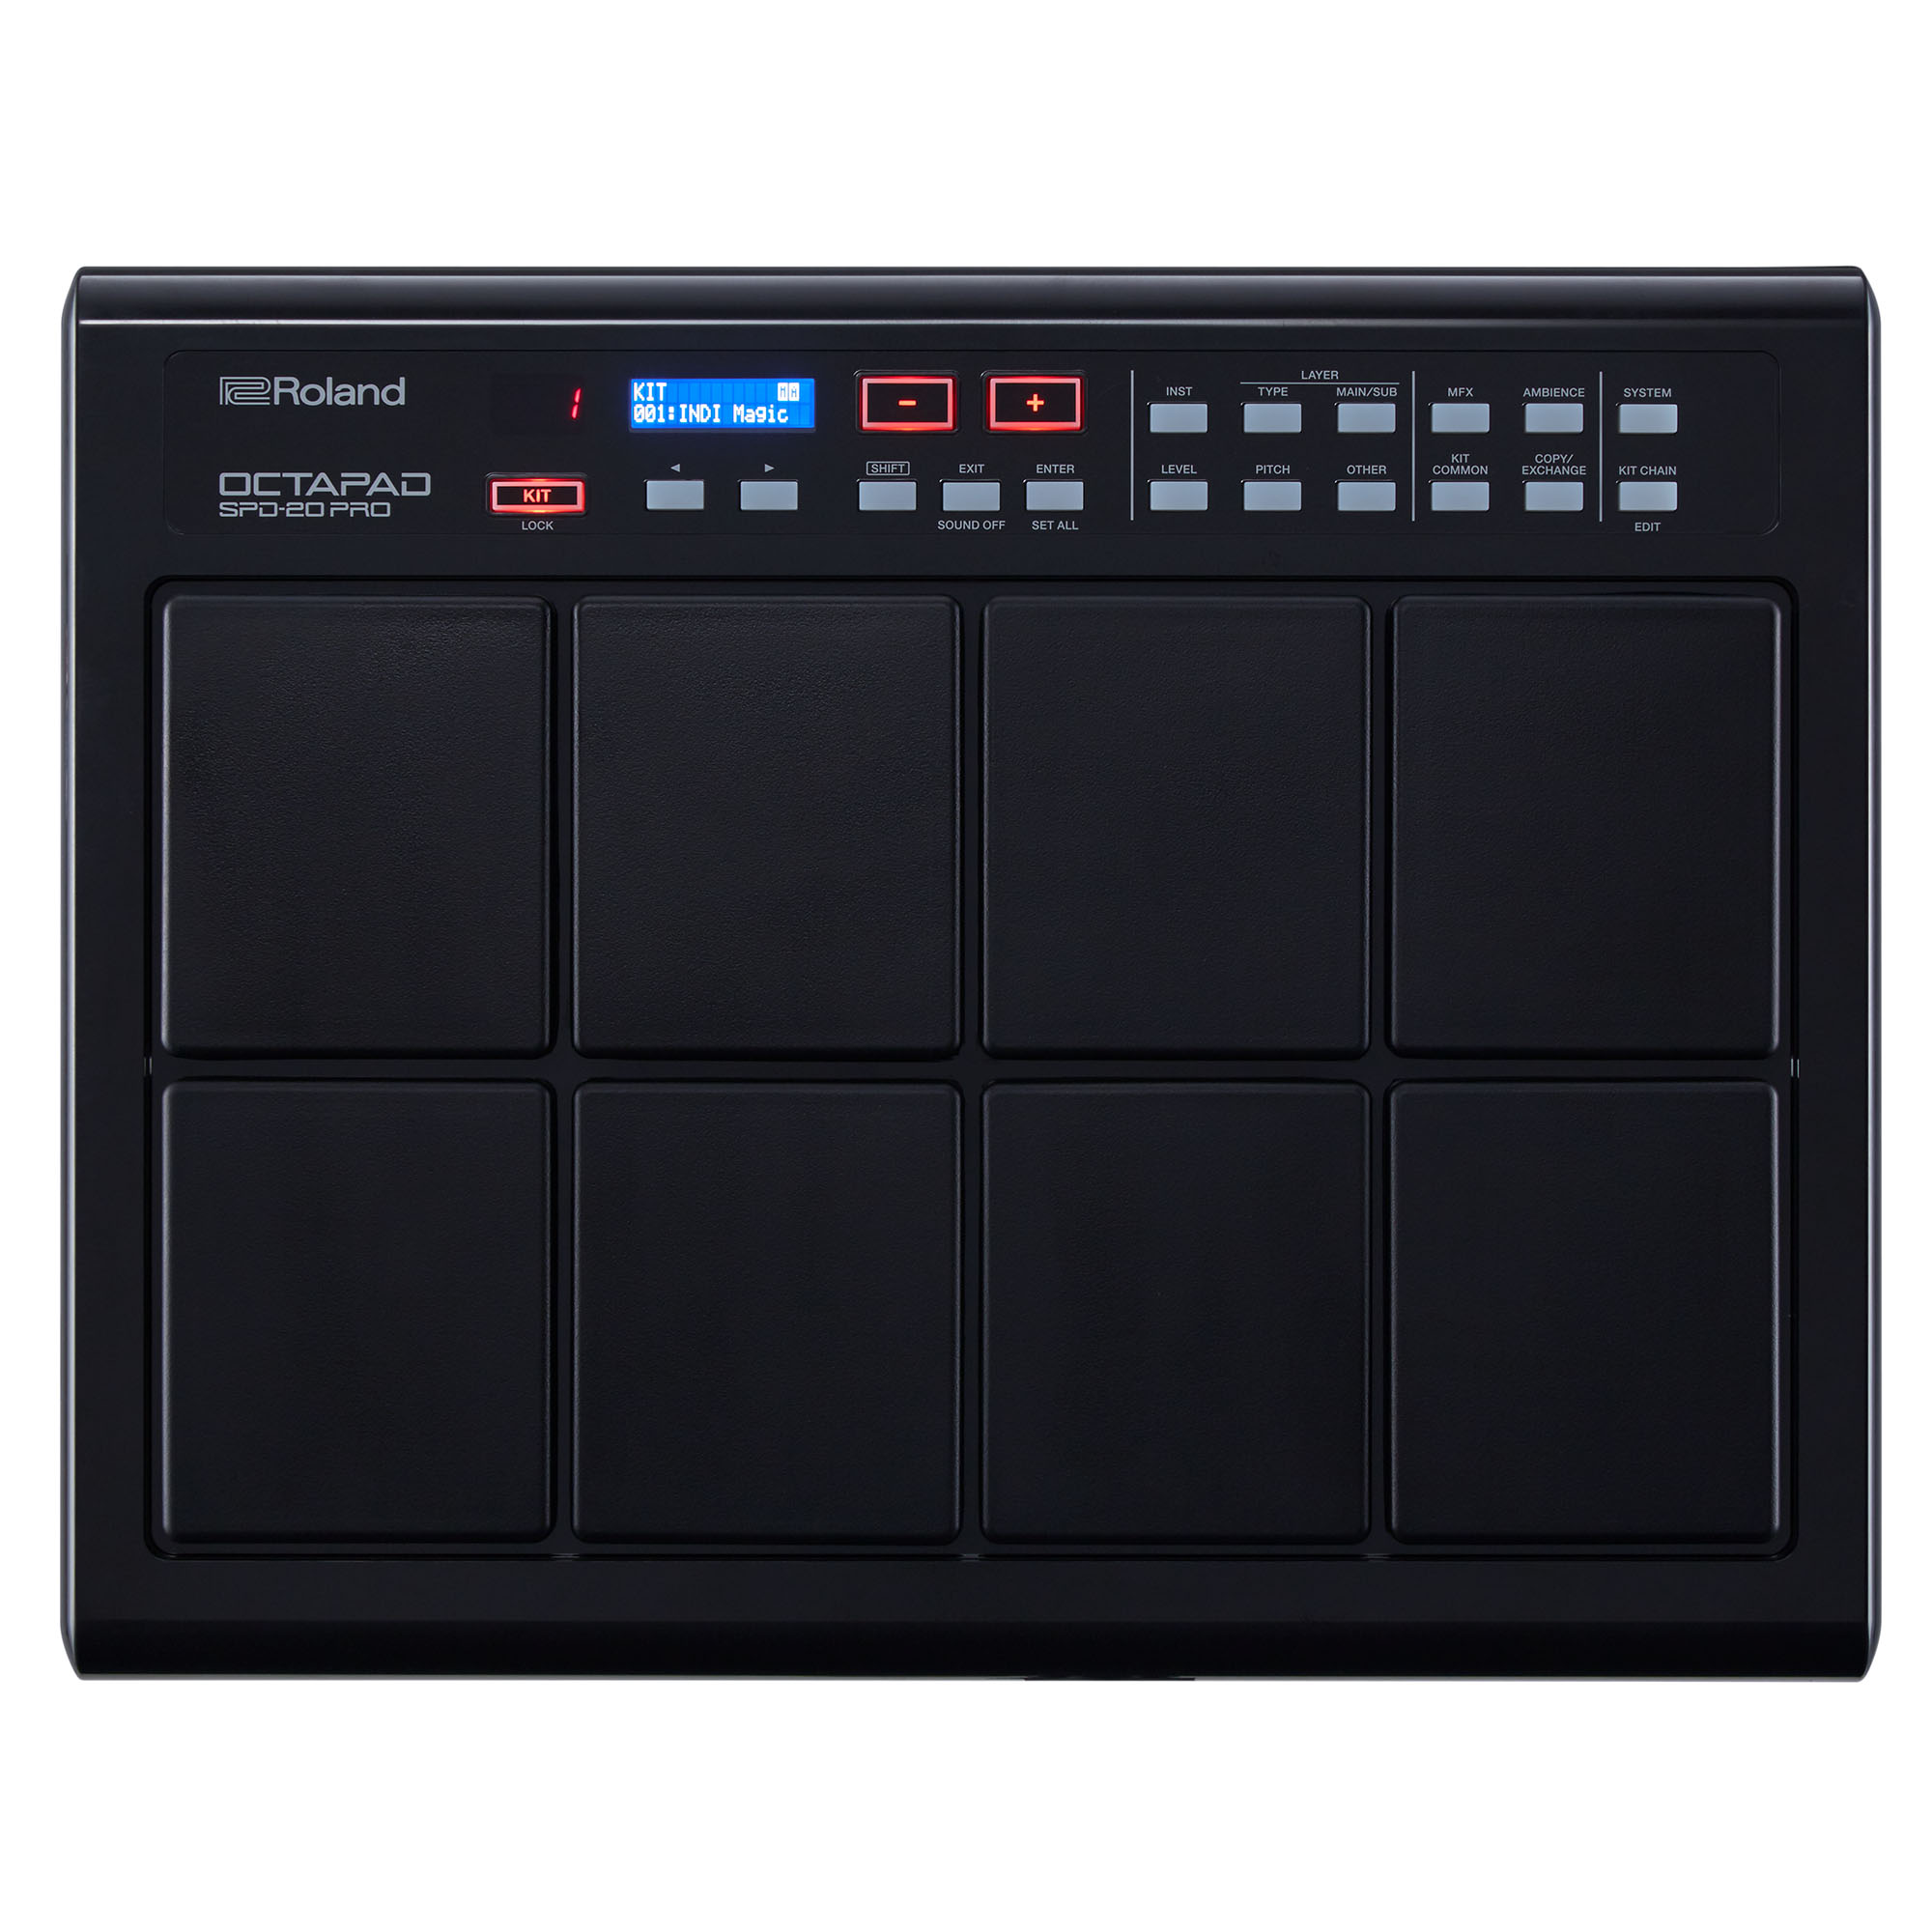 Roland Spd-20 Pro Bk - Electronic drum mutlipad & sampling pad - Variation 2